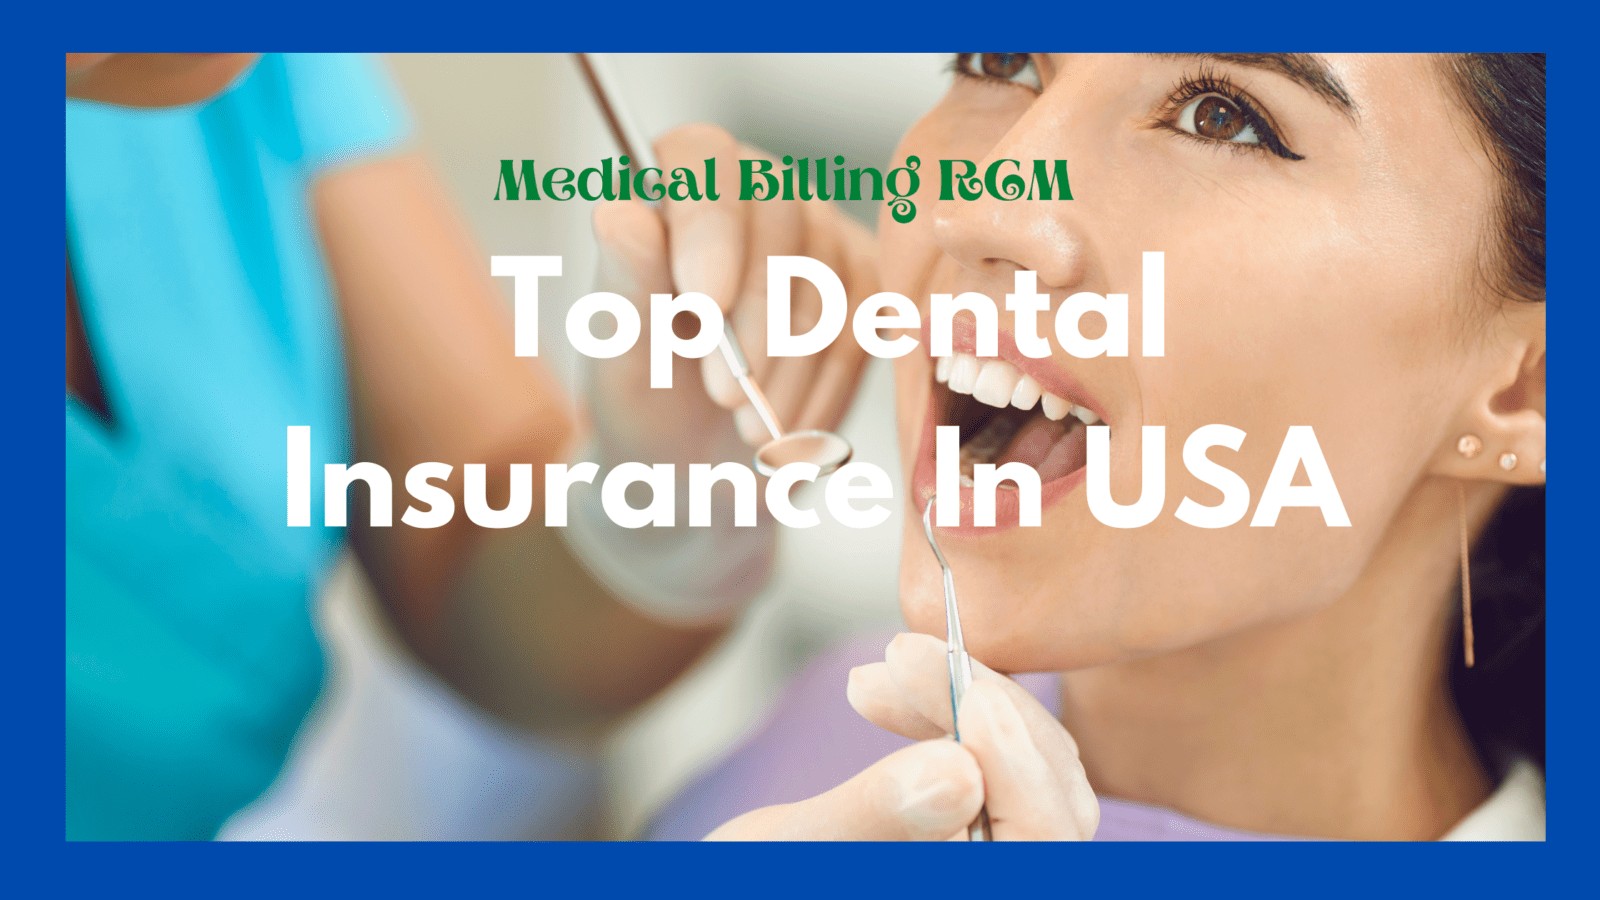 Top dental insurance in USA